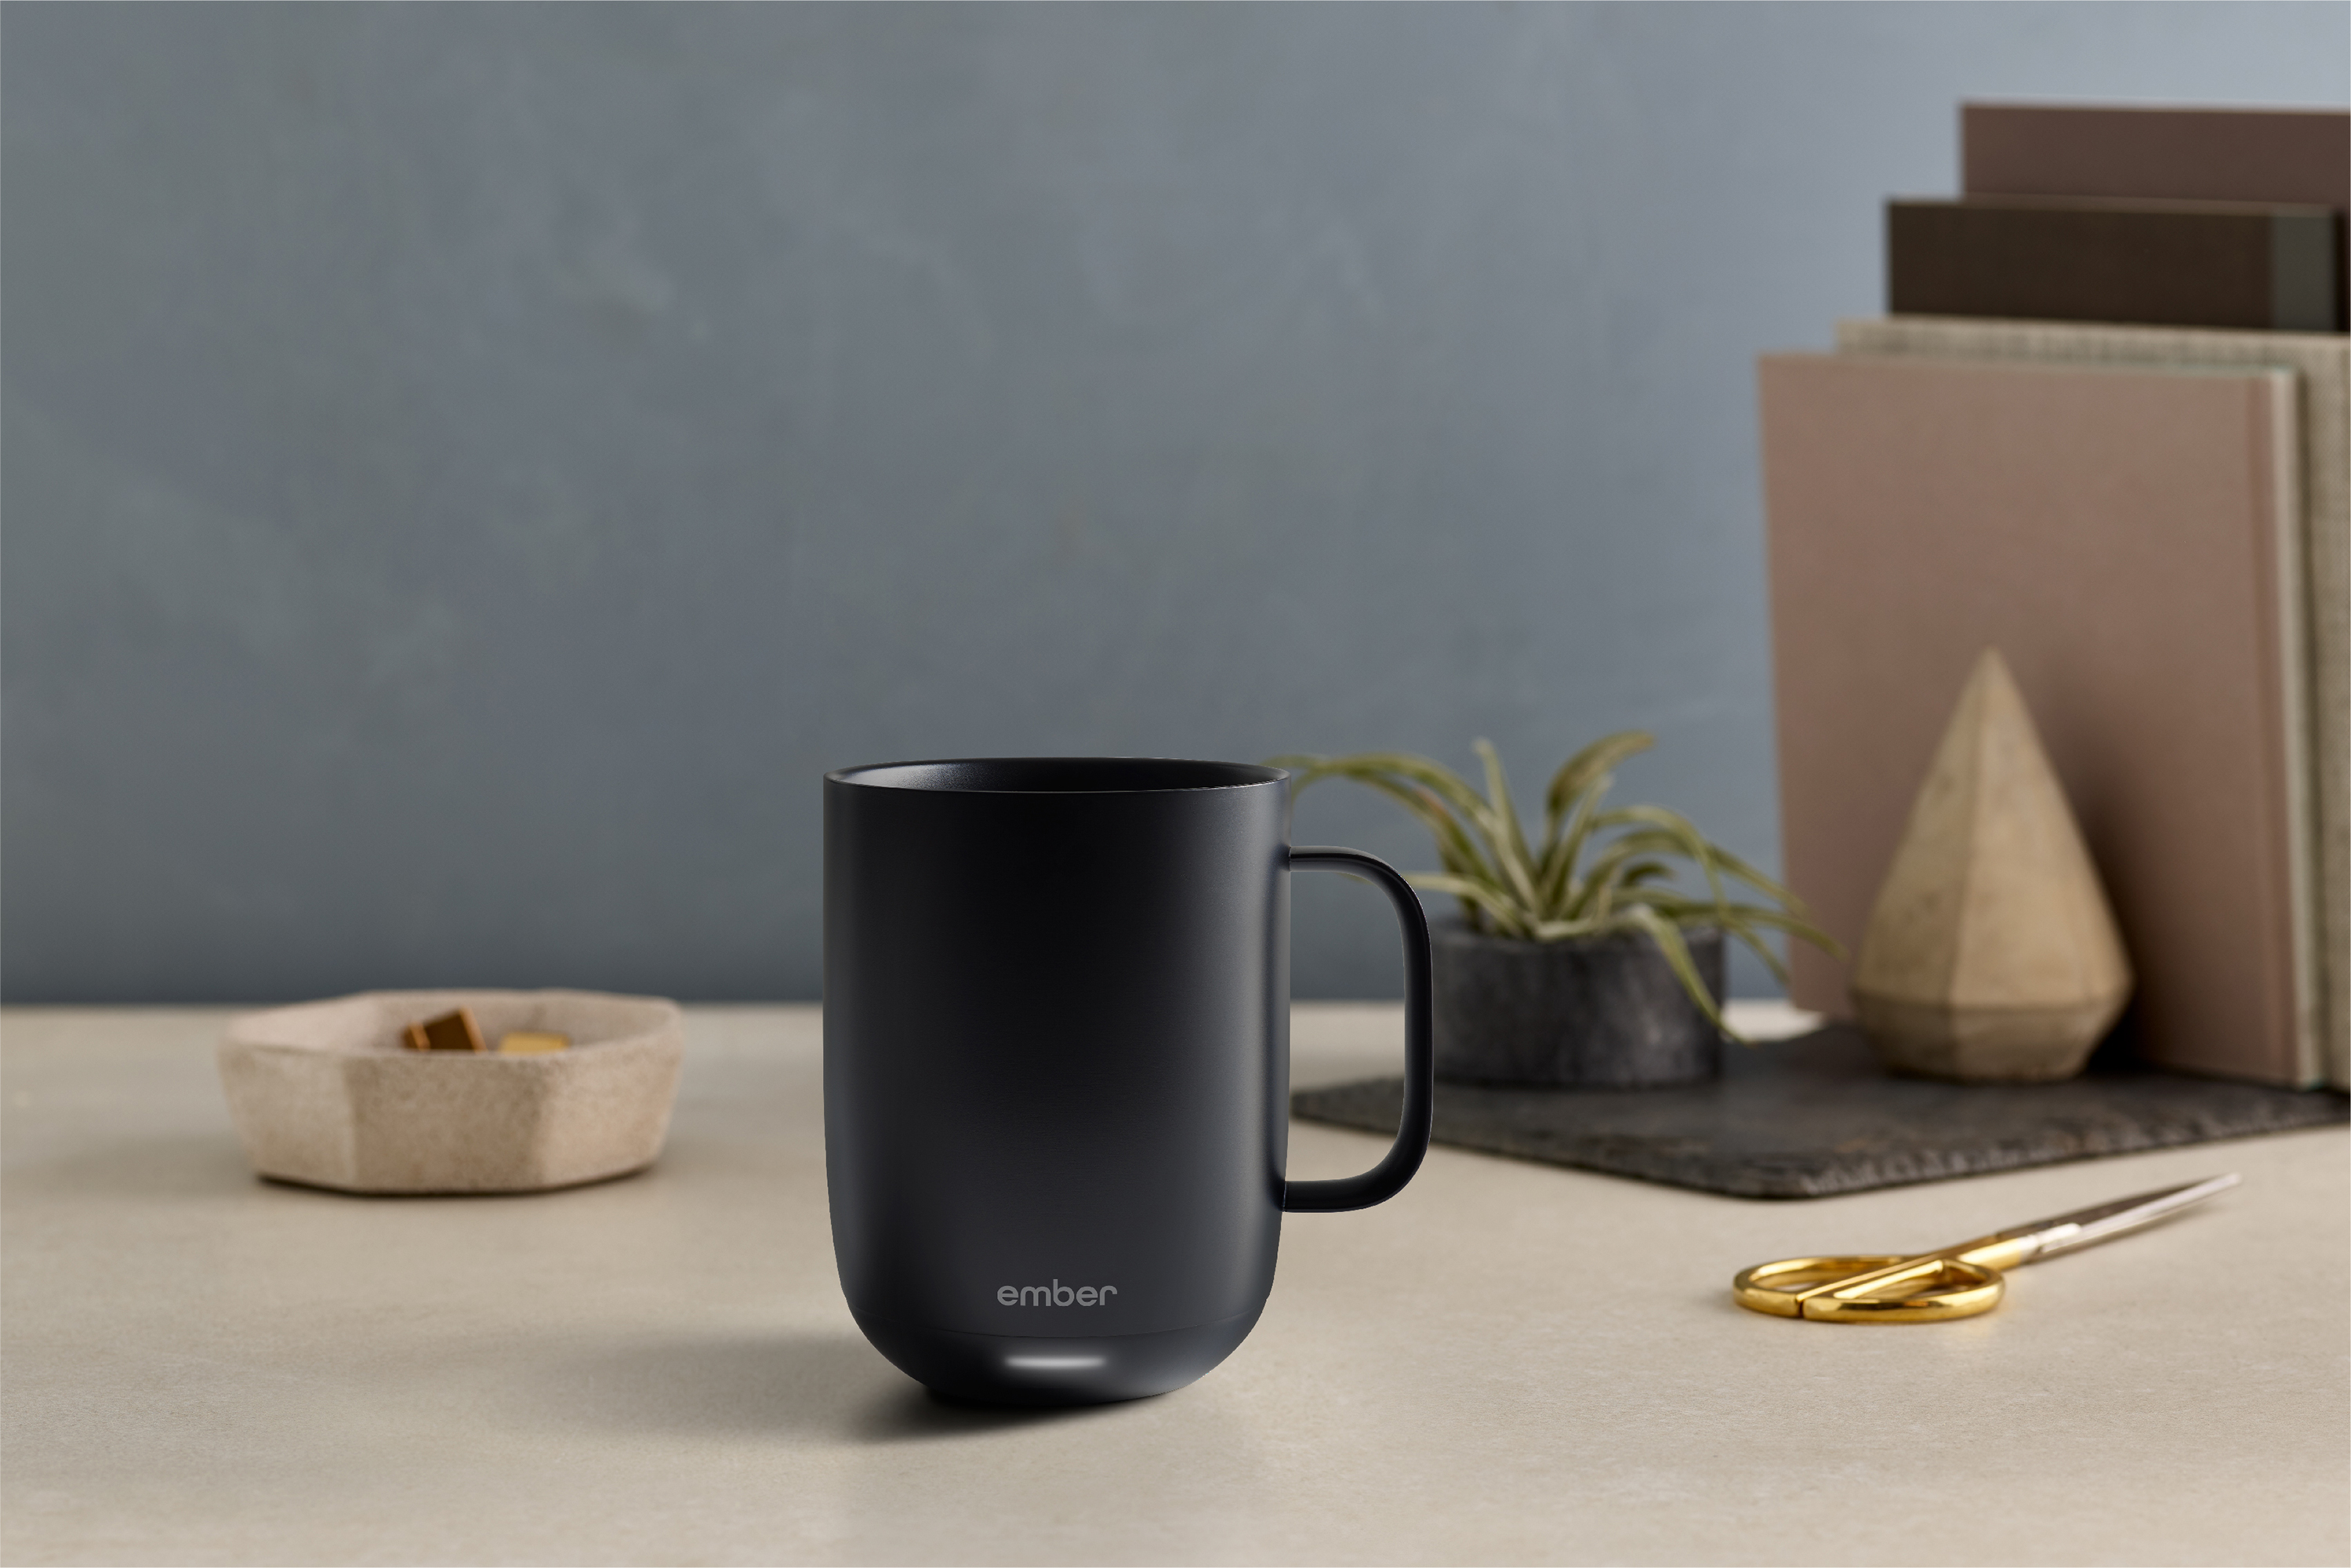 Ember Temperature Control Smart Mug 2, 14 oz, Black, Up To 1.5-hr Battery Life - App Controlled Heated Coffee/Tea Mug - Improved Design - image 2 of 6